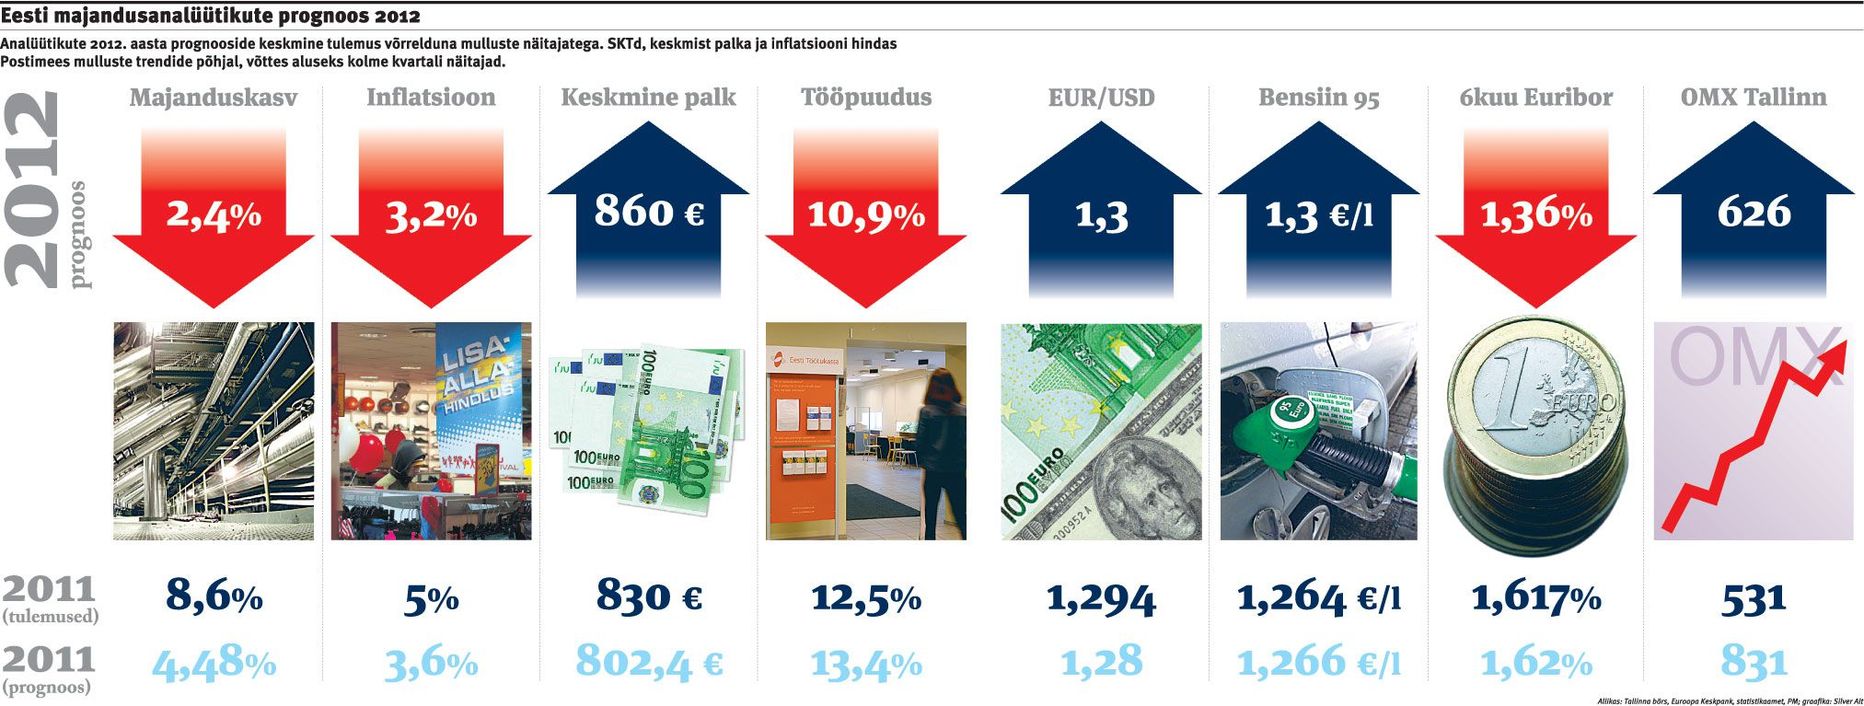 Eesti majandusanalüütikute prognoos 2012